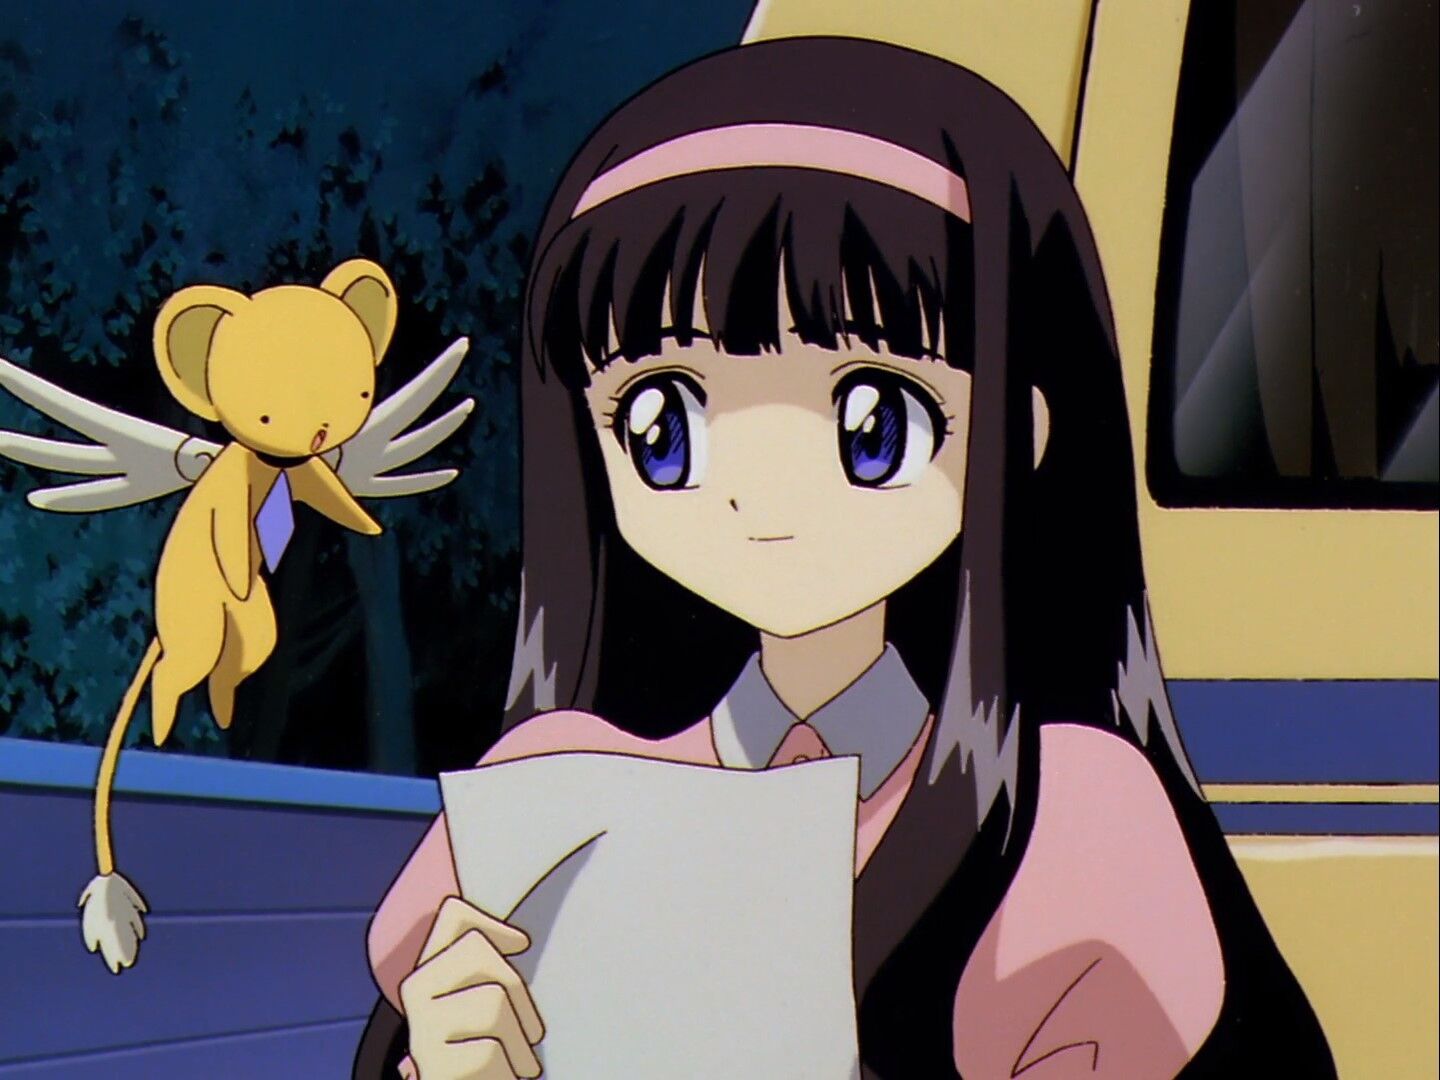 Sakura Card Captors (1ª Temporada) - 7 de Abril de 1998